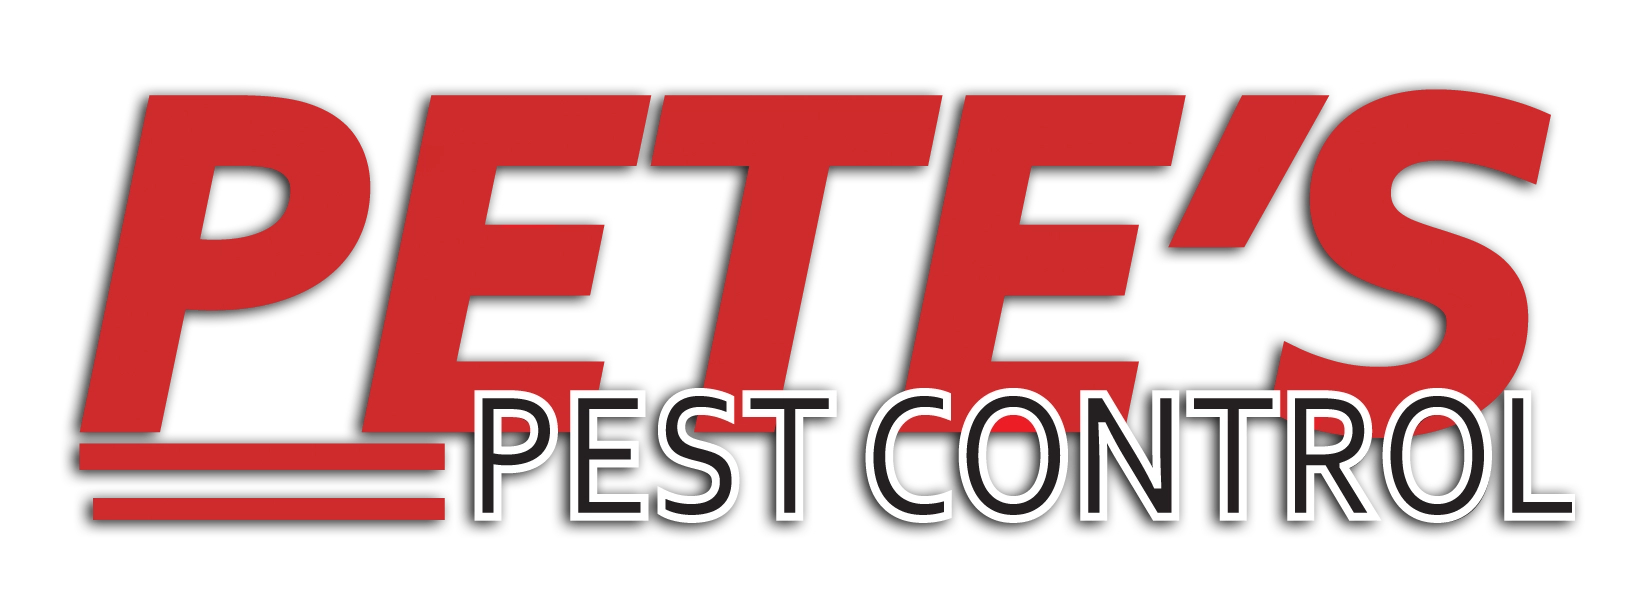 Pete's Pest Control Logo